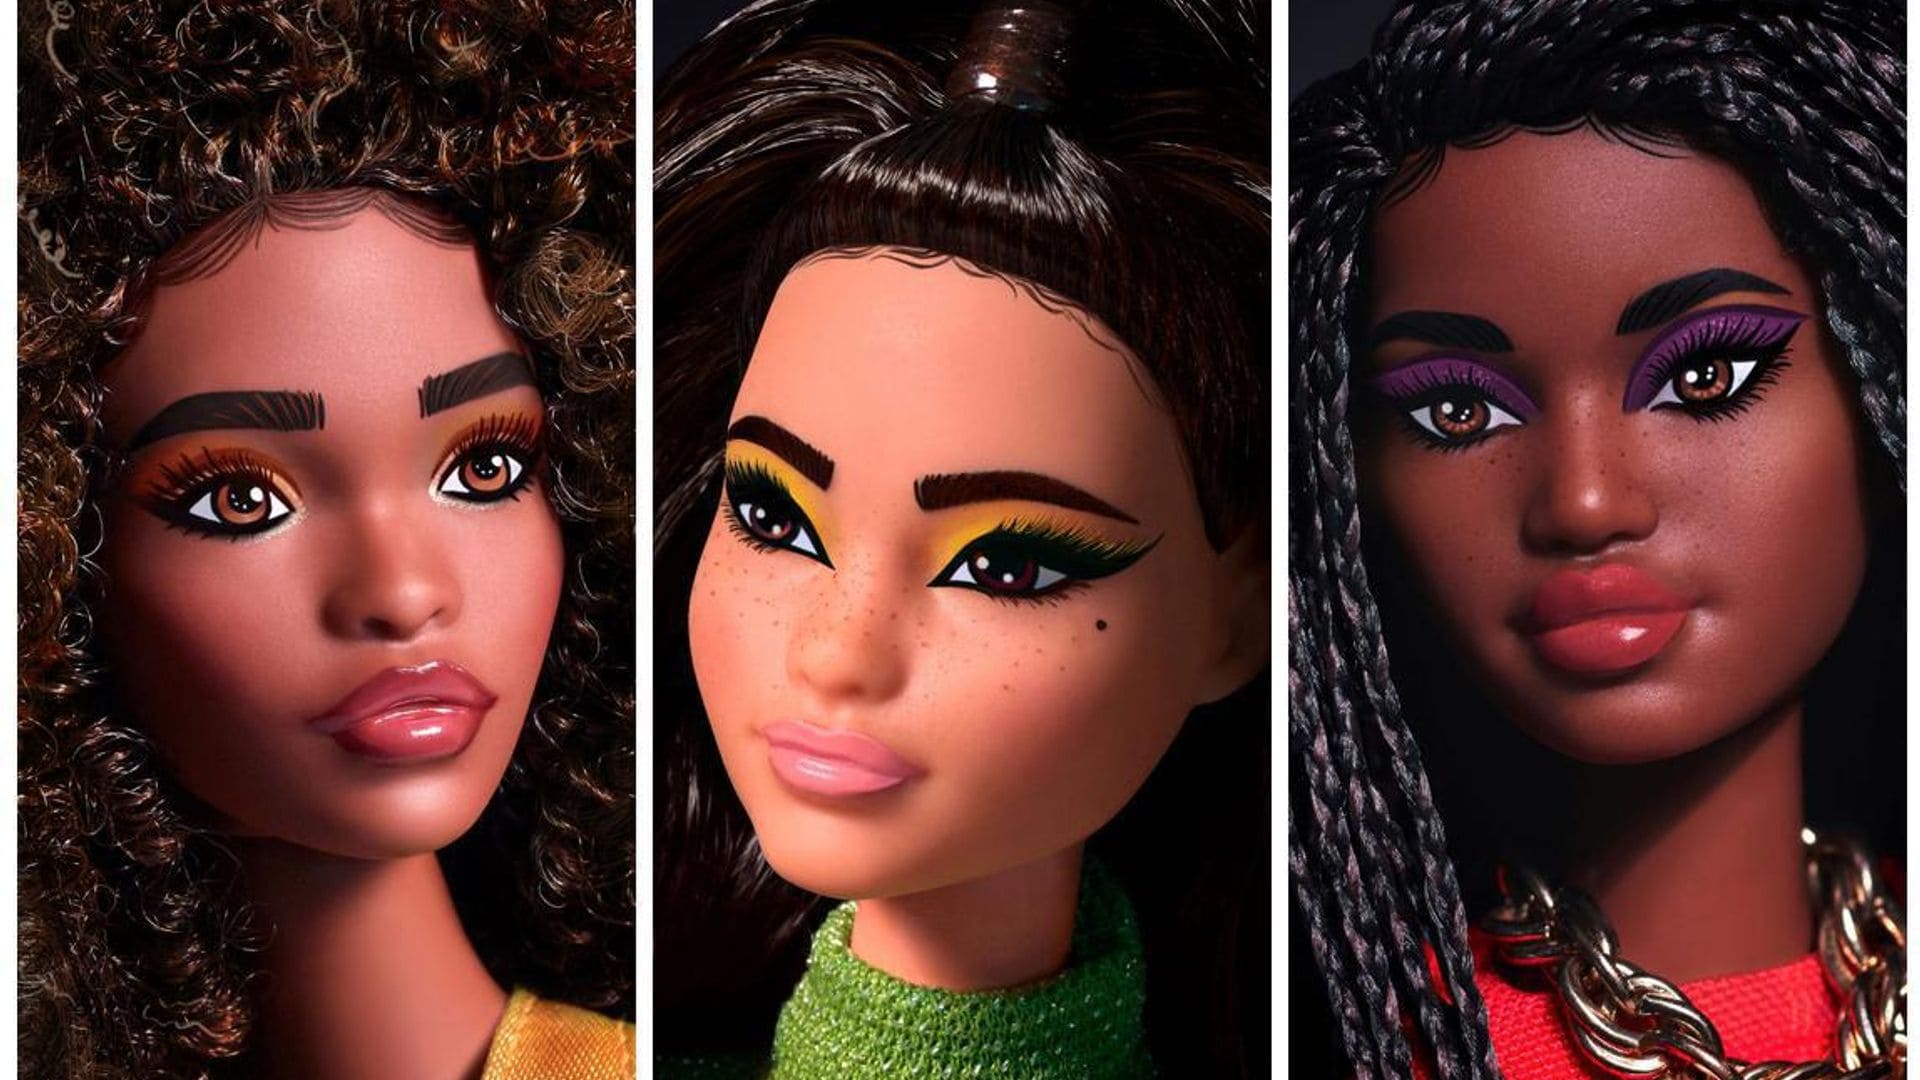 Barbie hired Sir John as her newest makeup artist